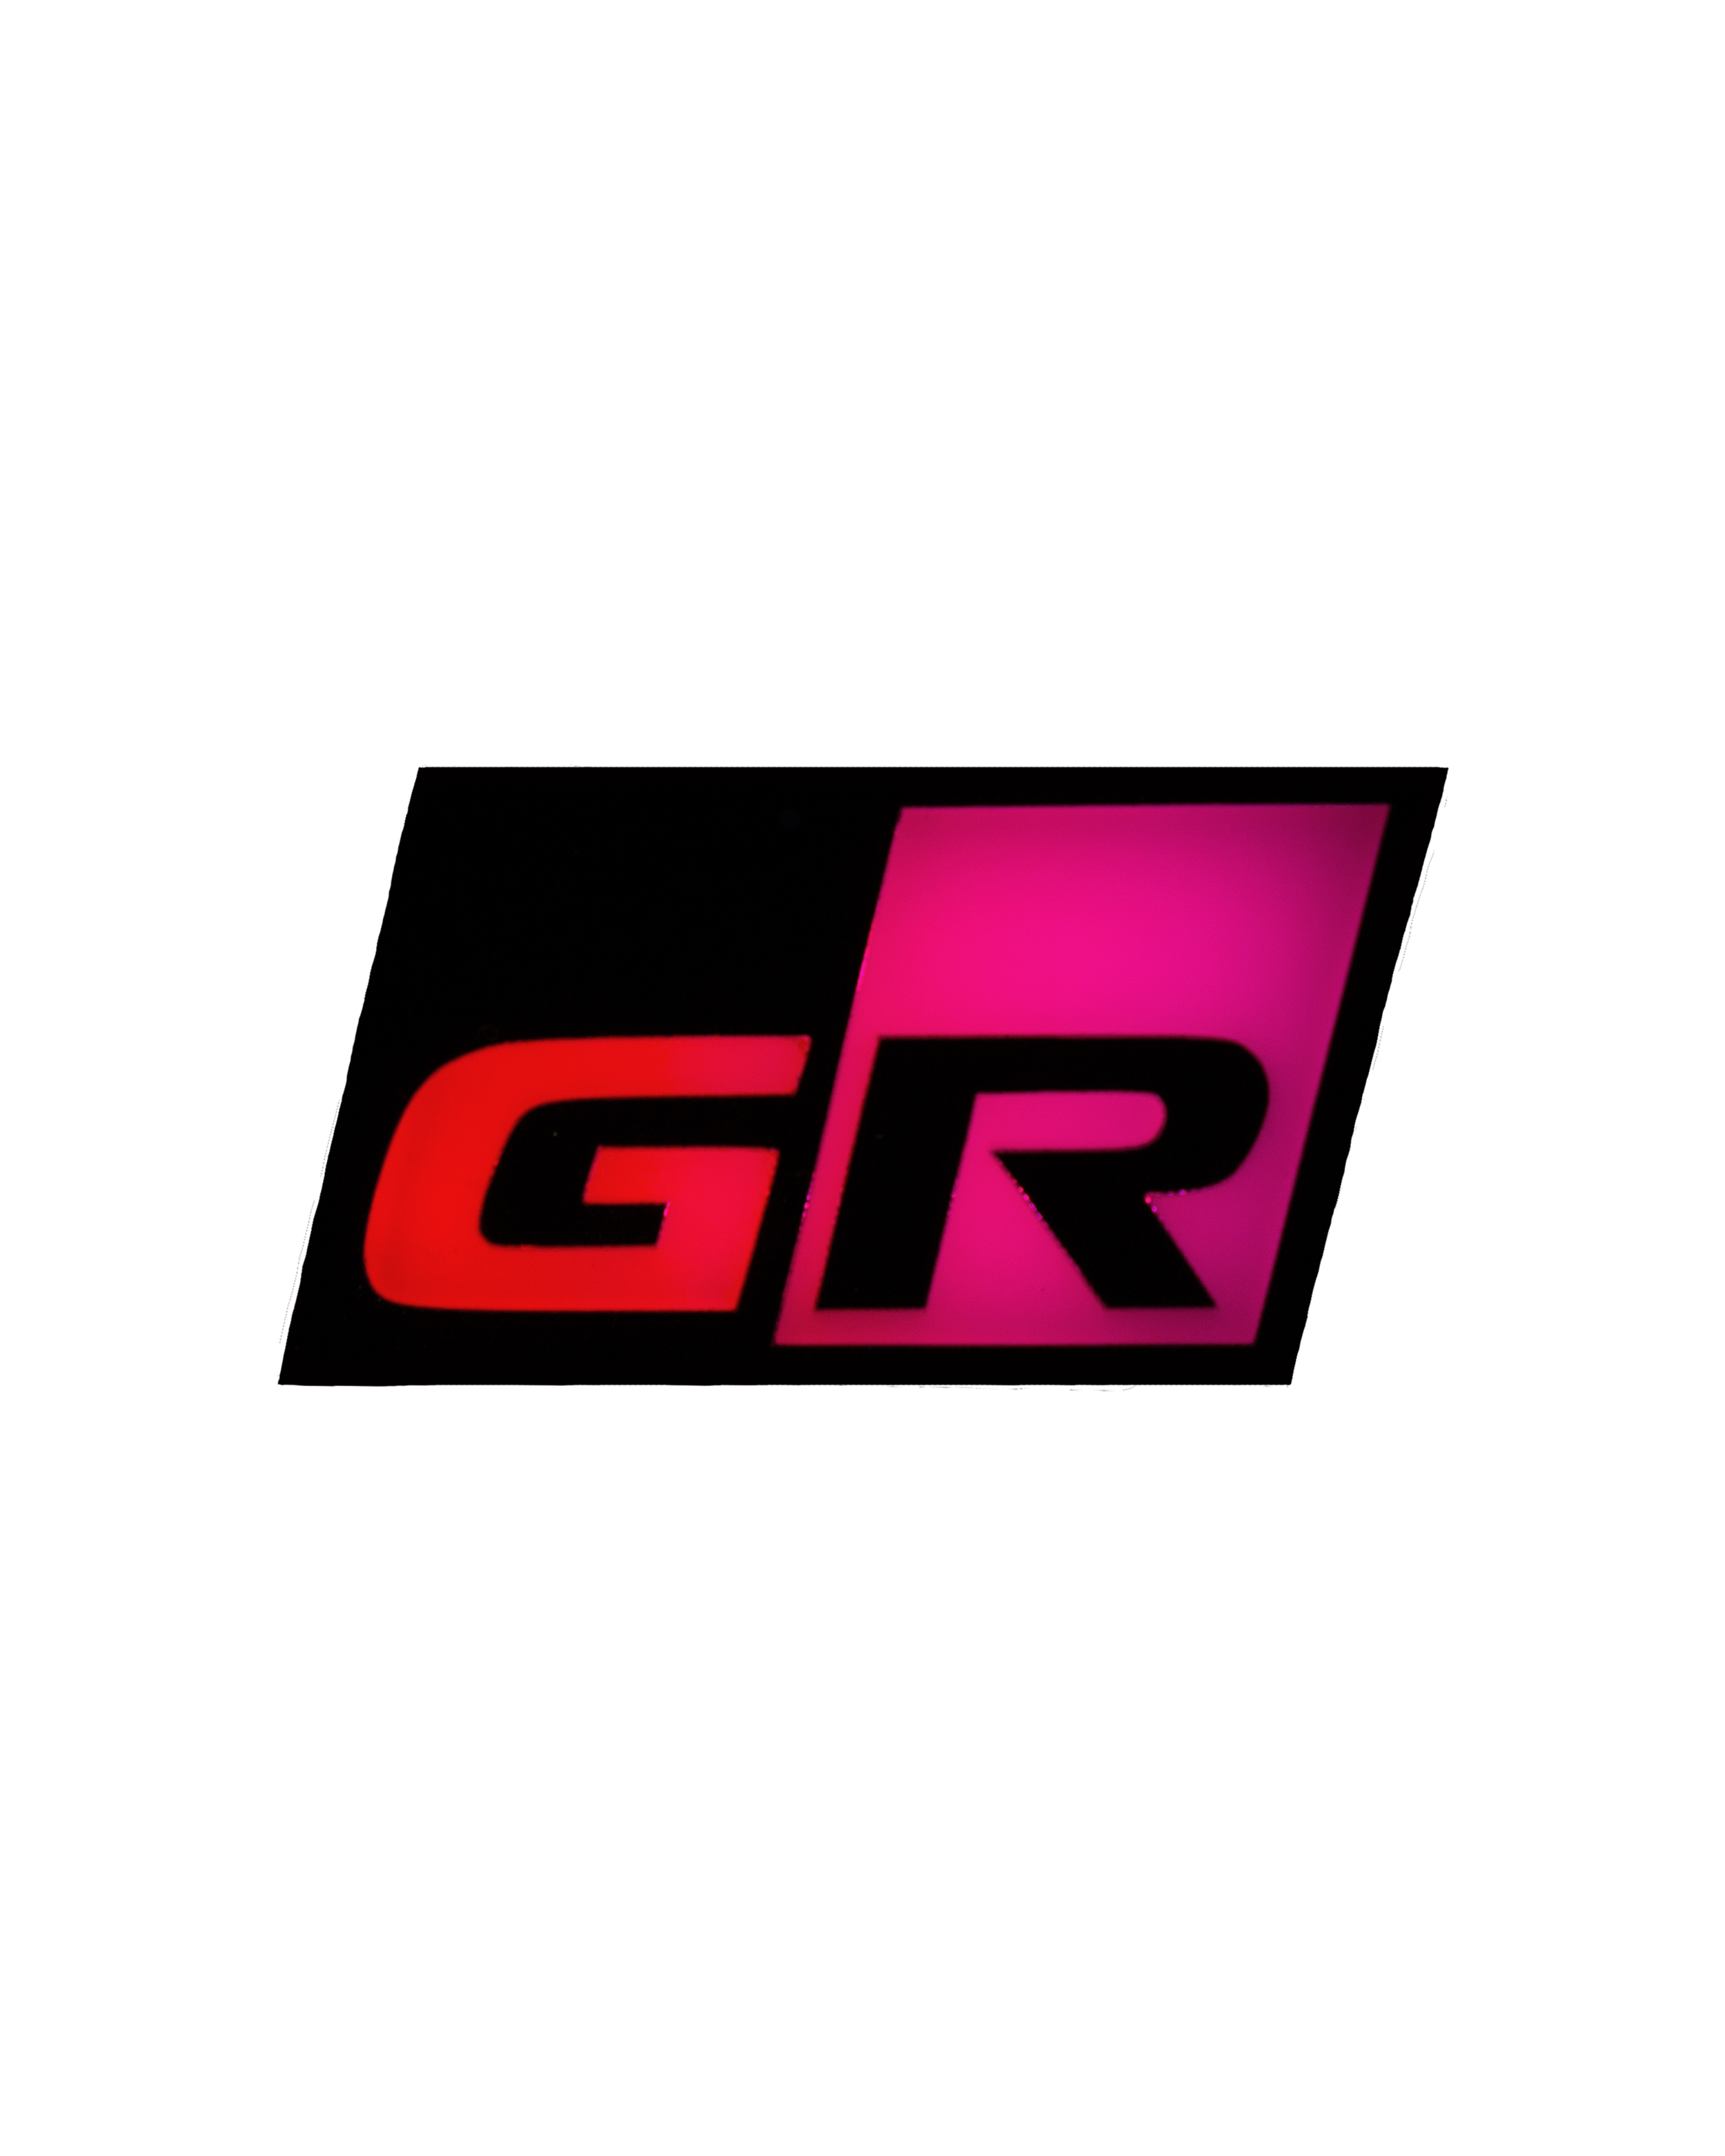 Lit Logos GR Badge